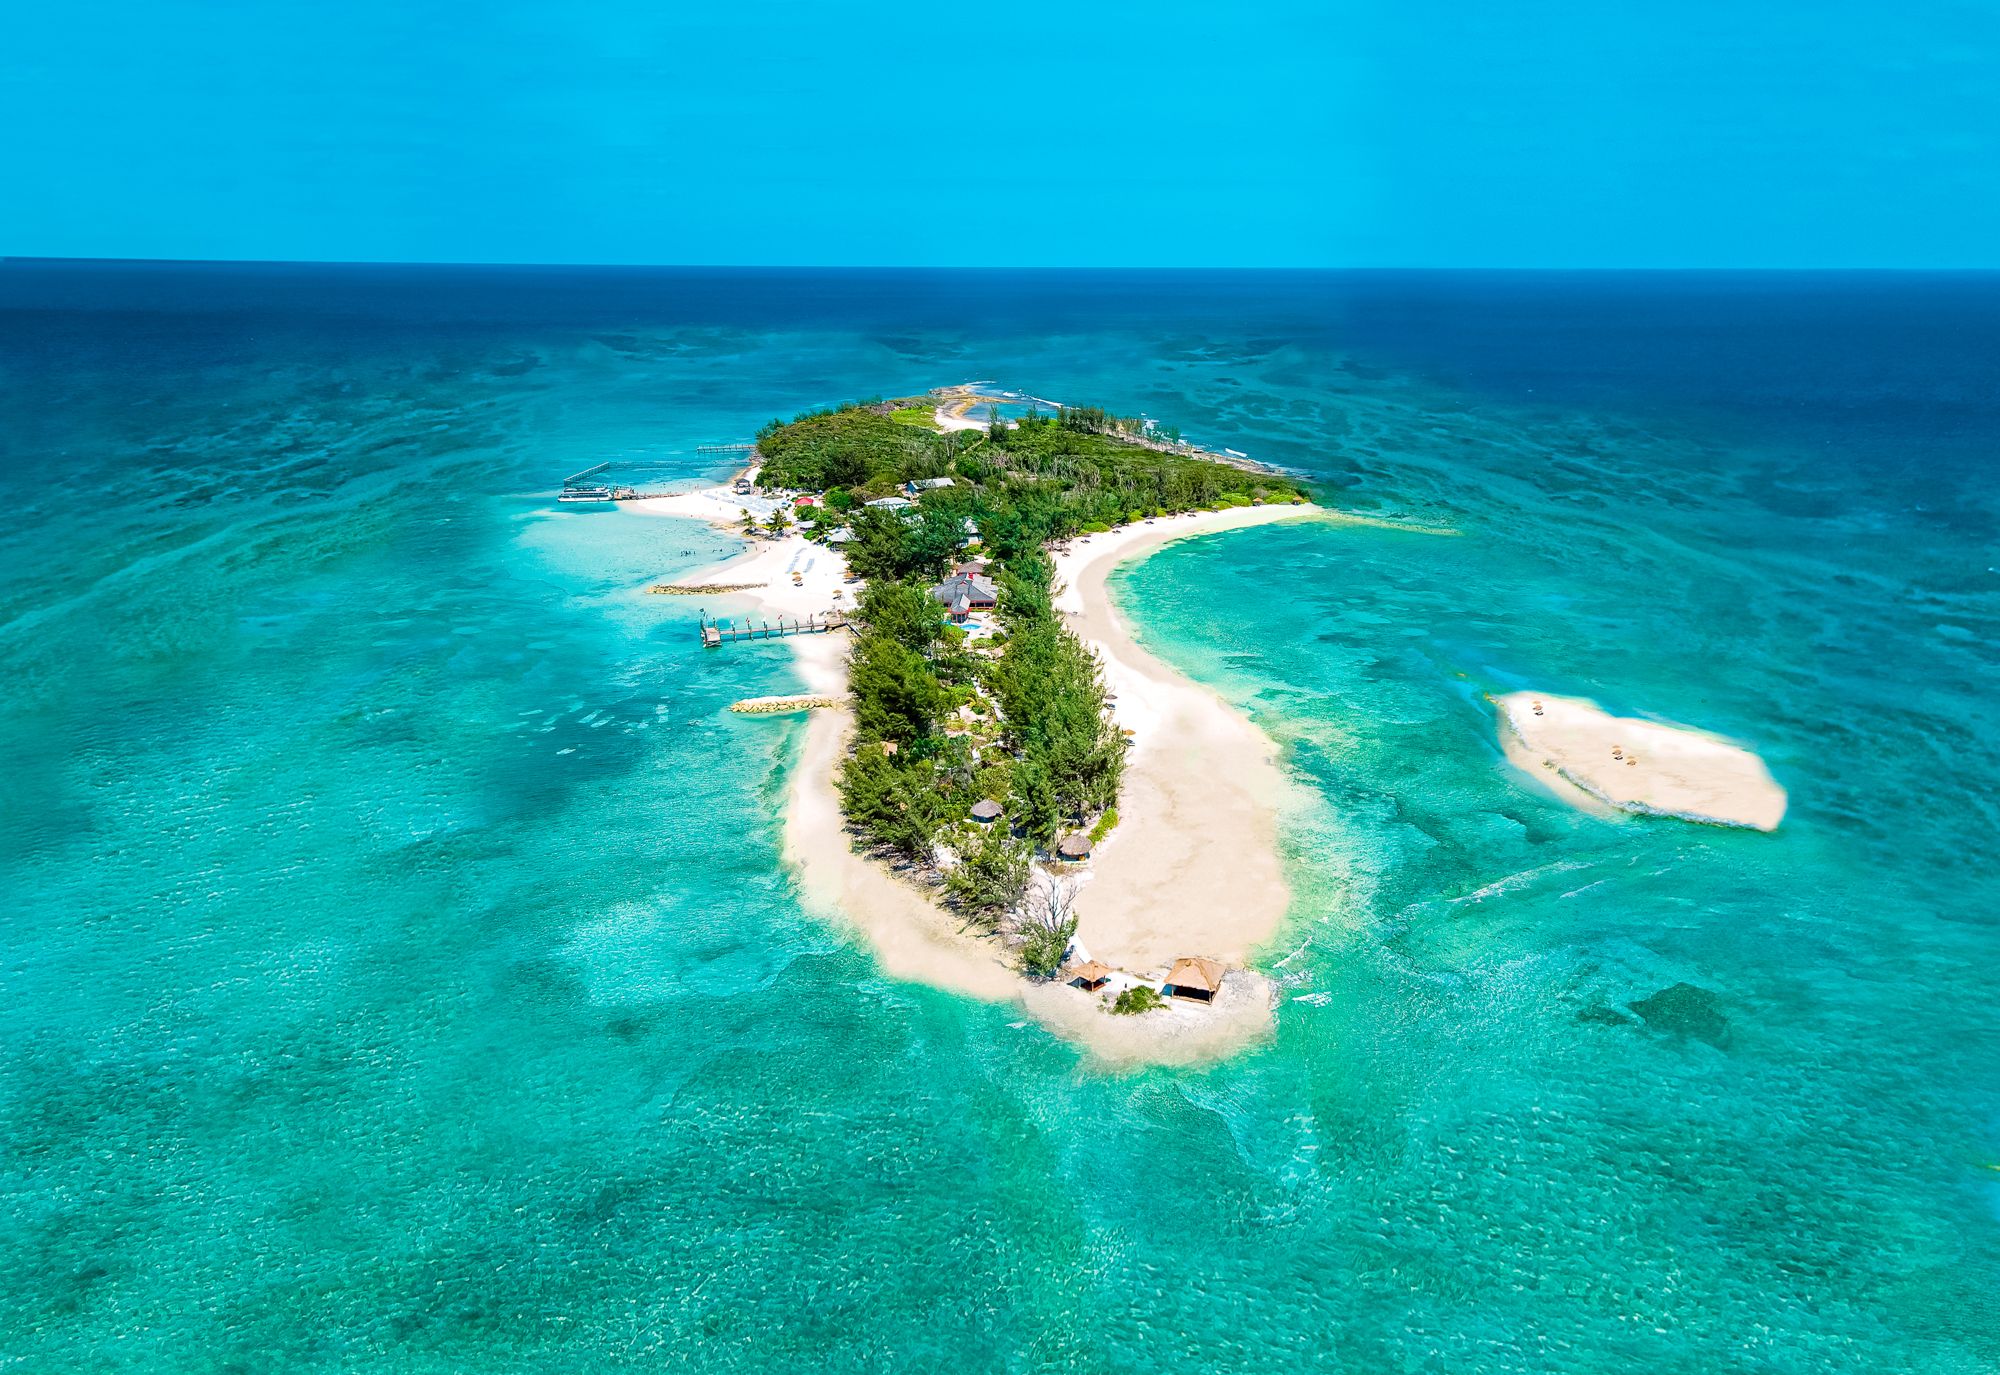 Sandals Royal Bahamian Private Island